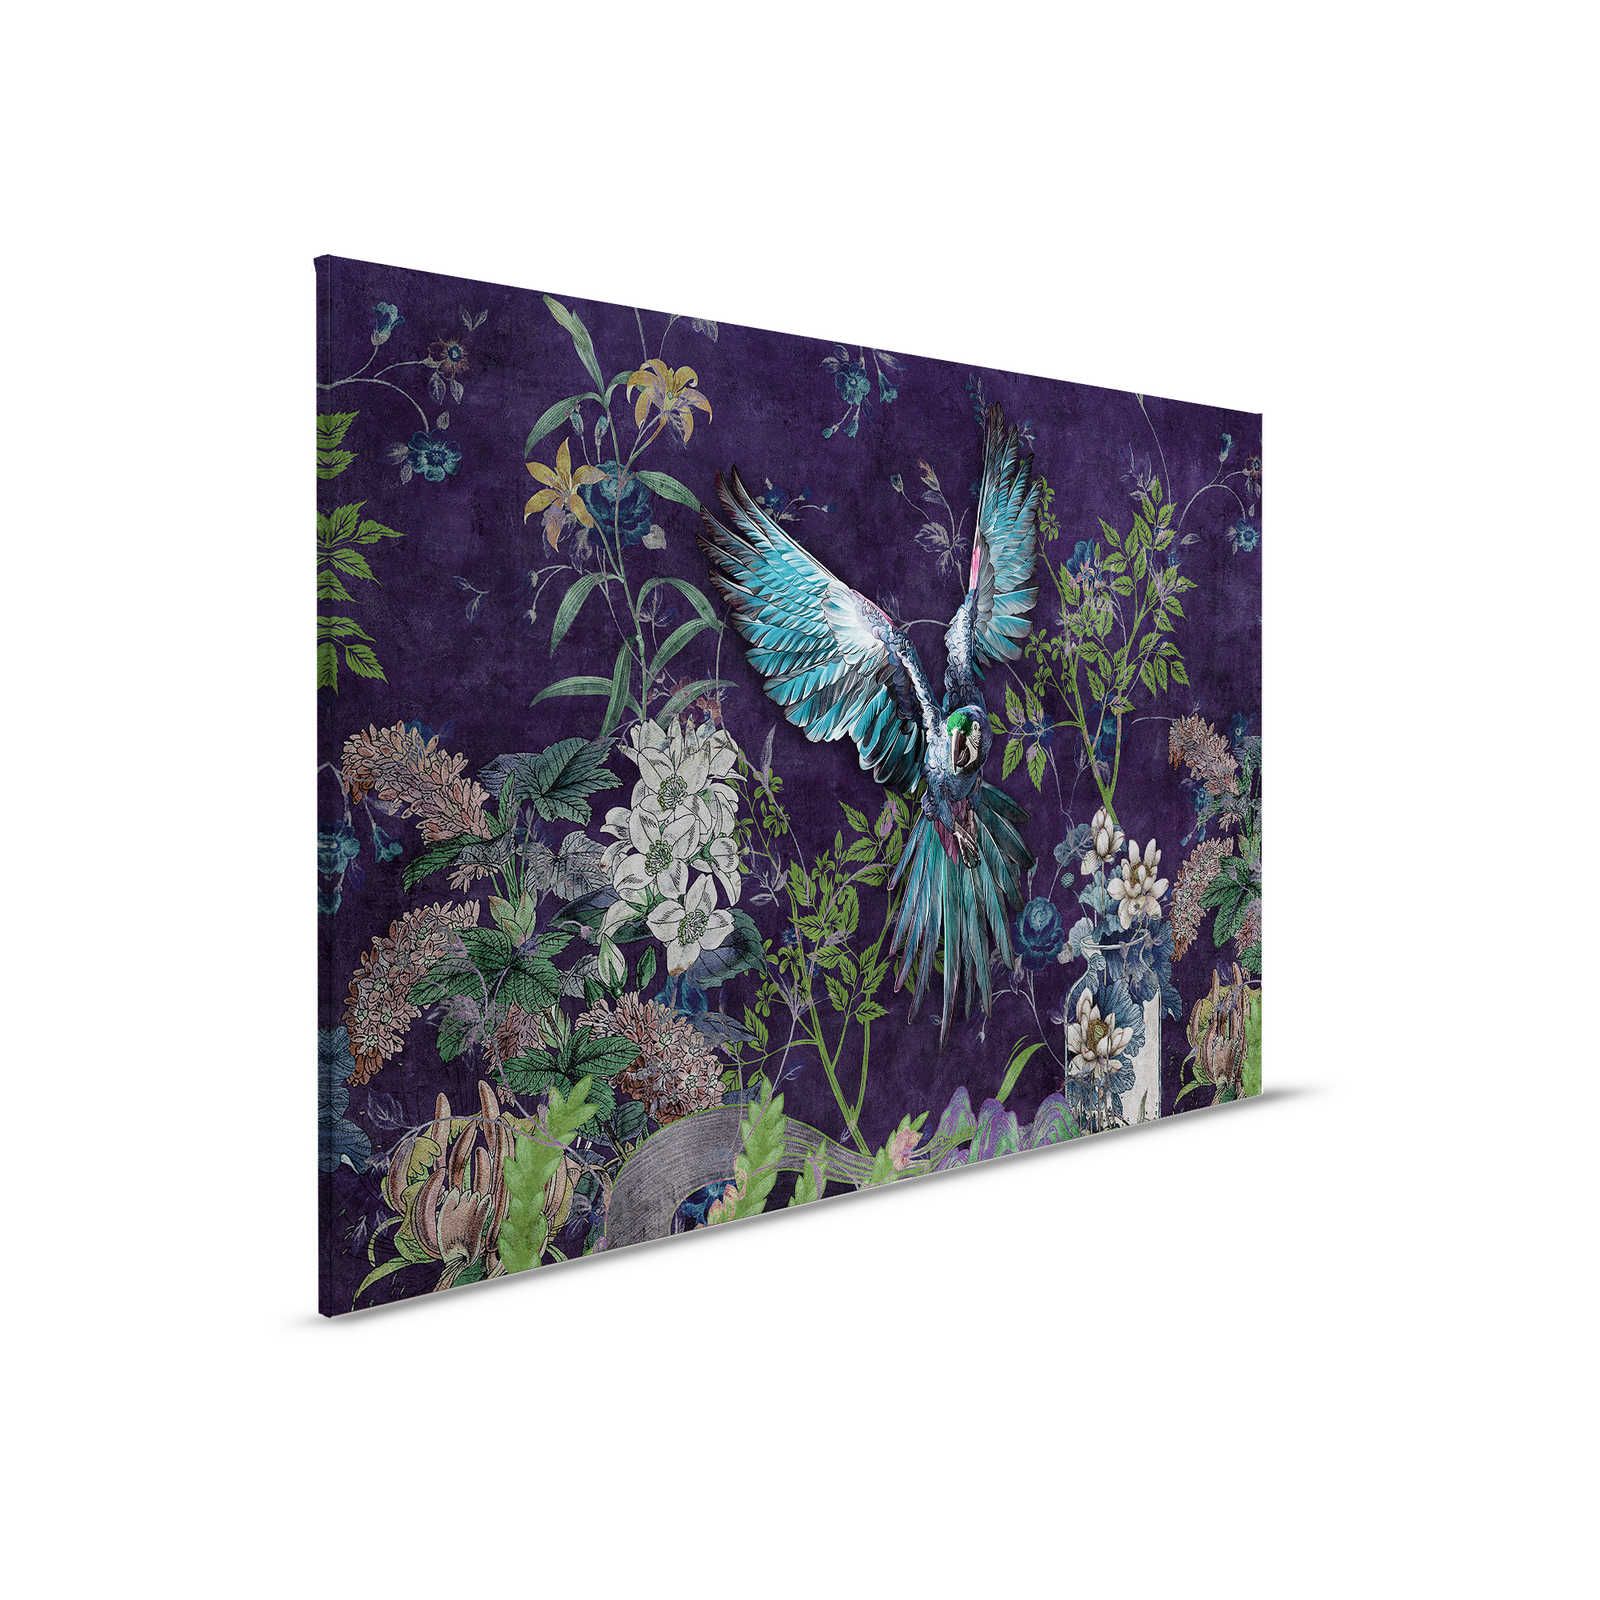 Tropical Hero 2 - Lienzo Loro pintando Flores y Fondo Negro - 0.90 m x 0.60 m
